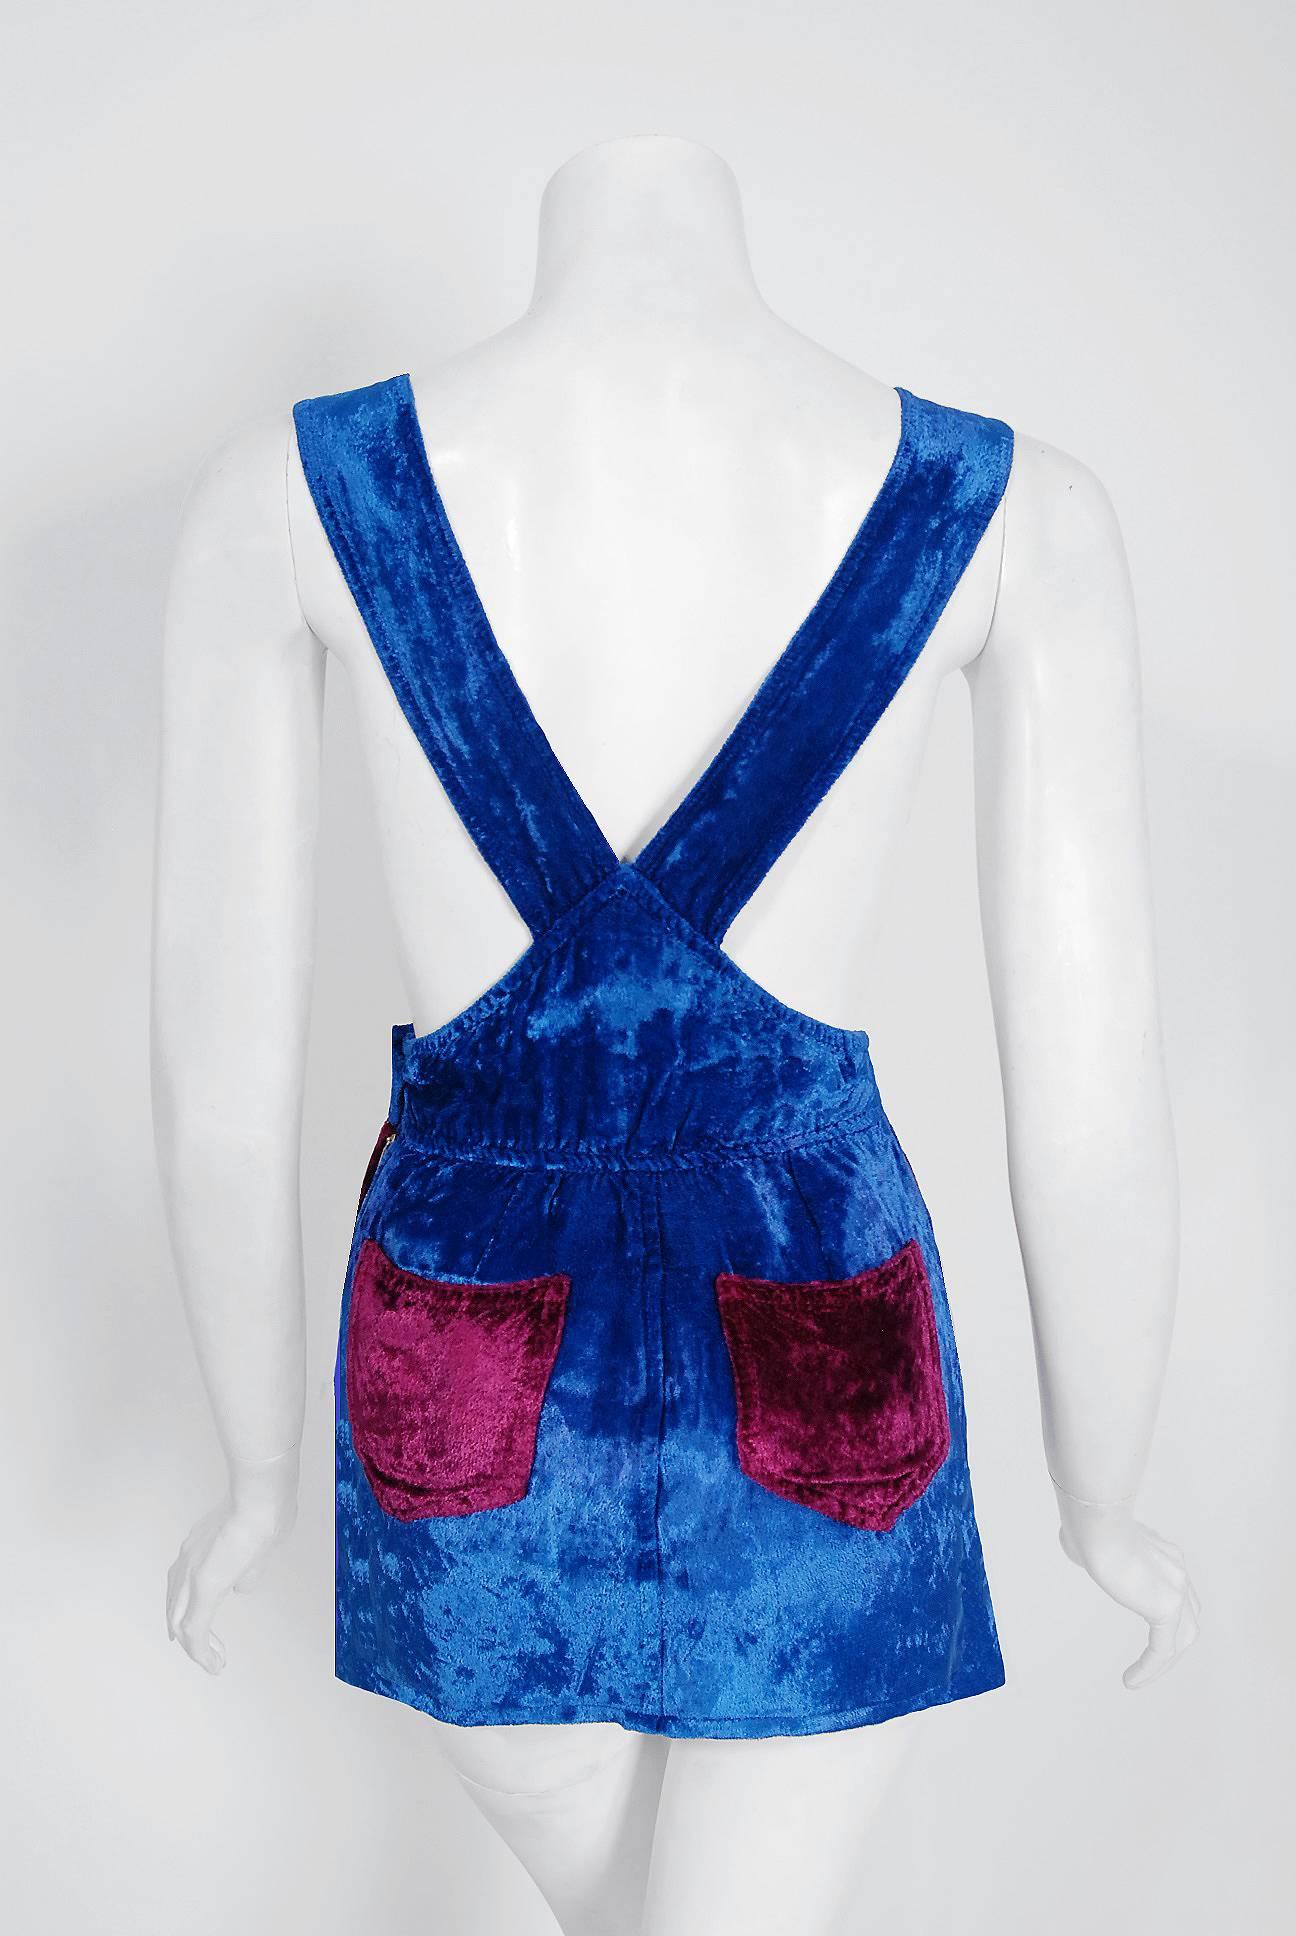 Blue Vintage 1970's Mr Freedom Glam Rock Crushed Velvet Mod Mini Pinafore Skirt Dress For Sale